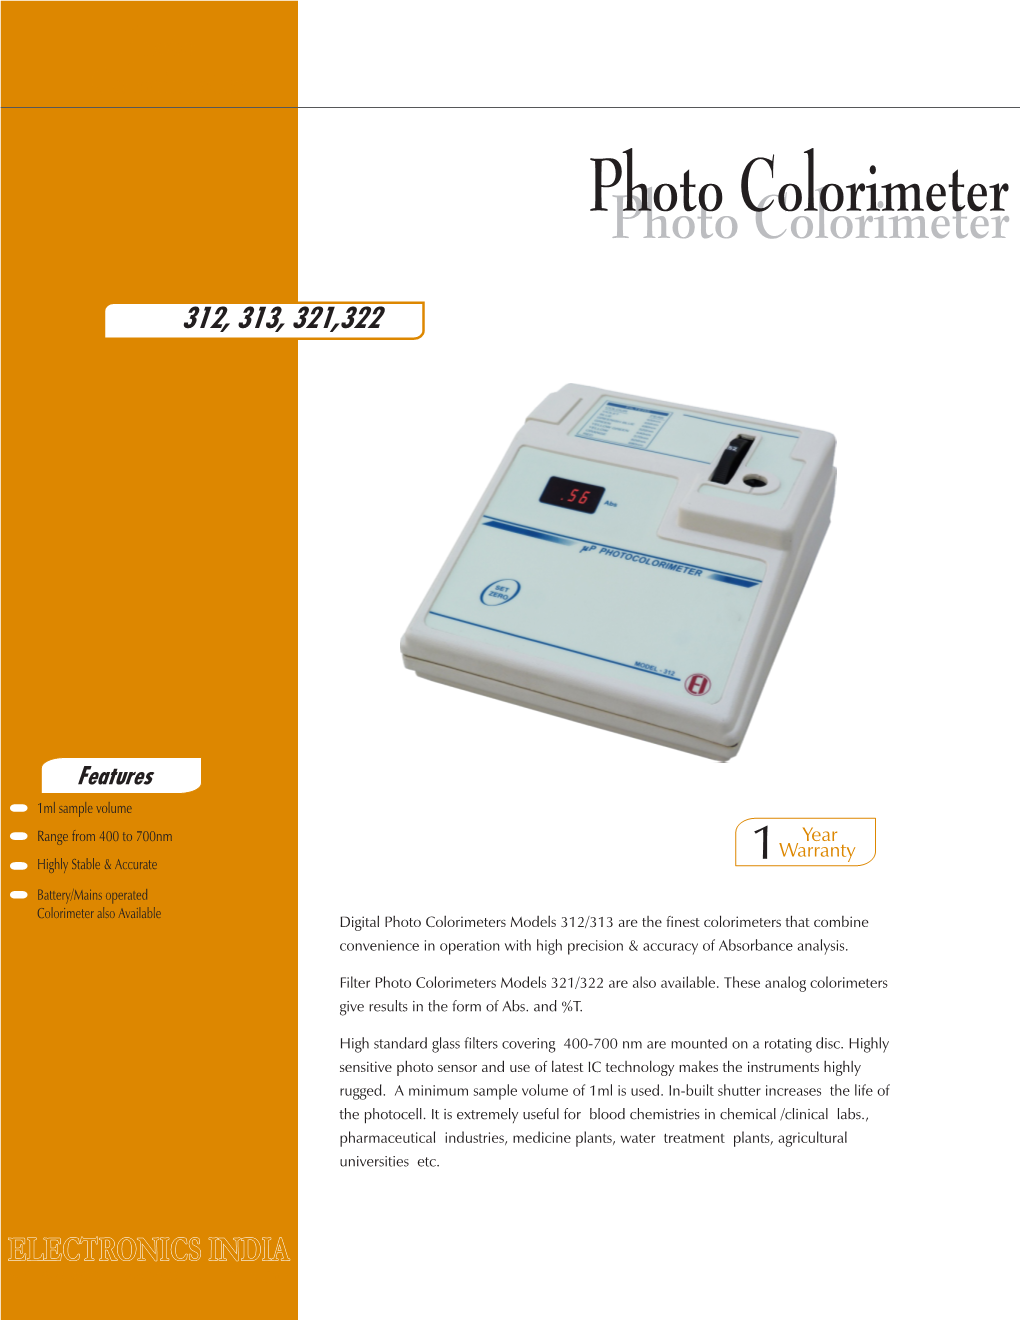 Digital-Photo-Colorimeter.Pdf